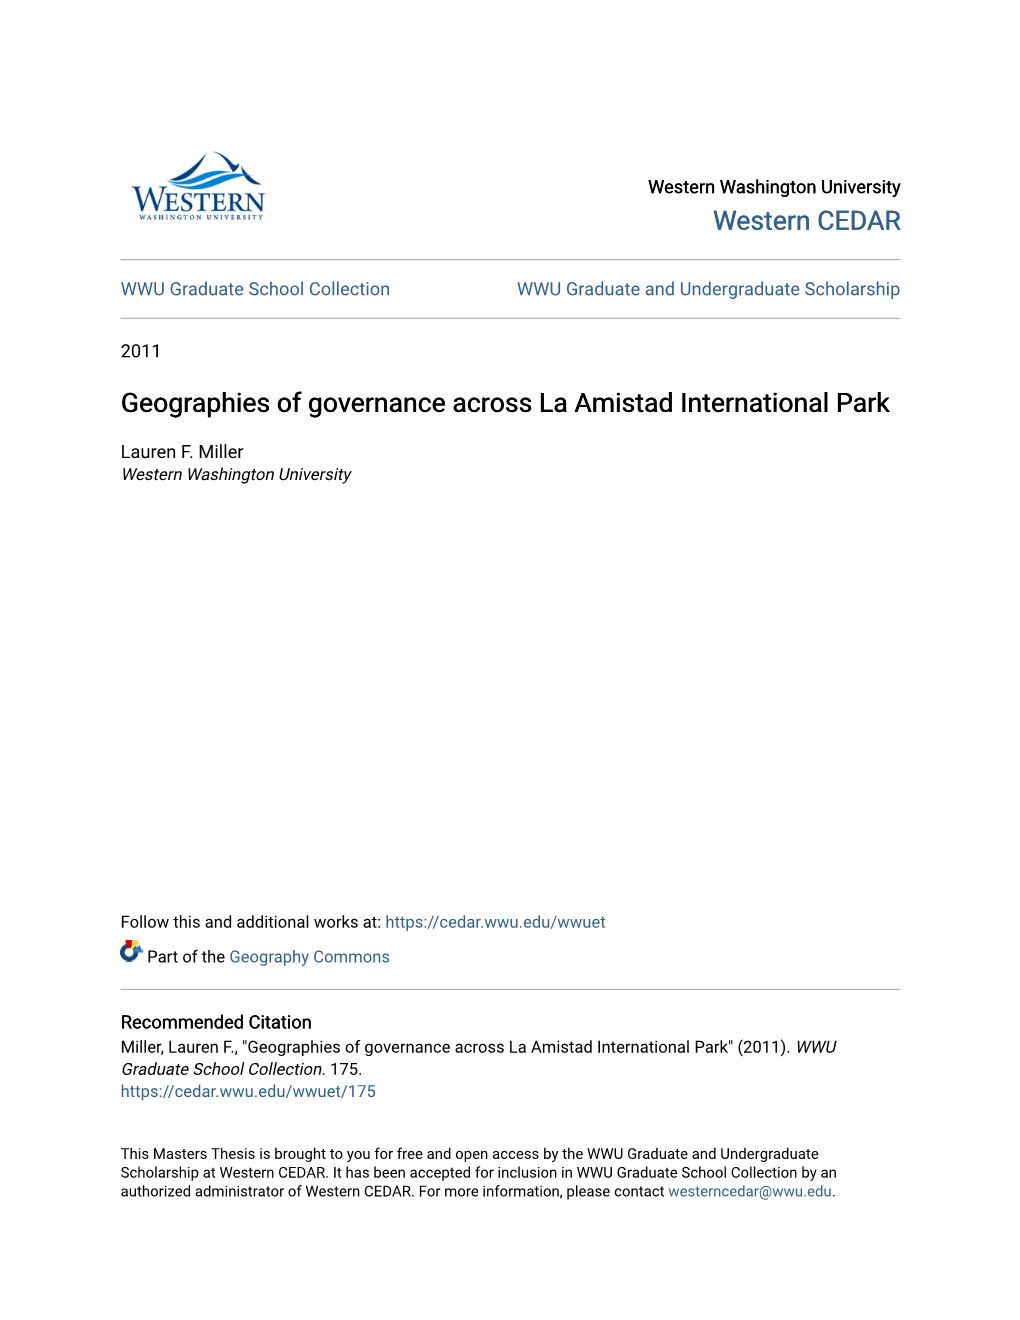 Geographies of Governance Across La Amistad International Park